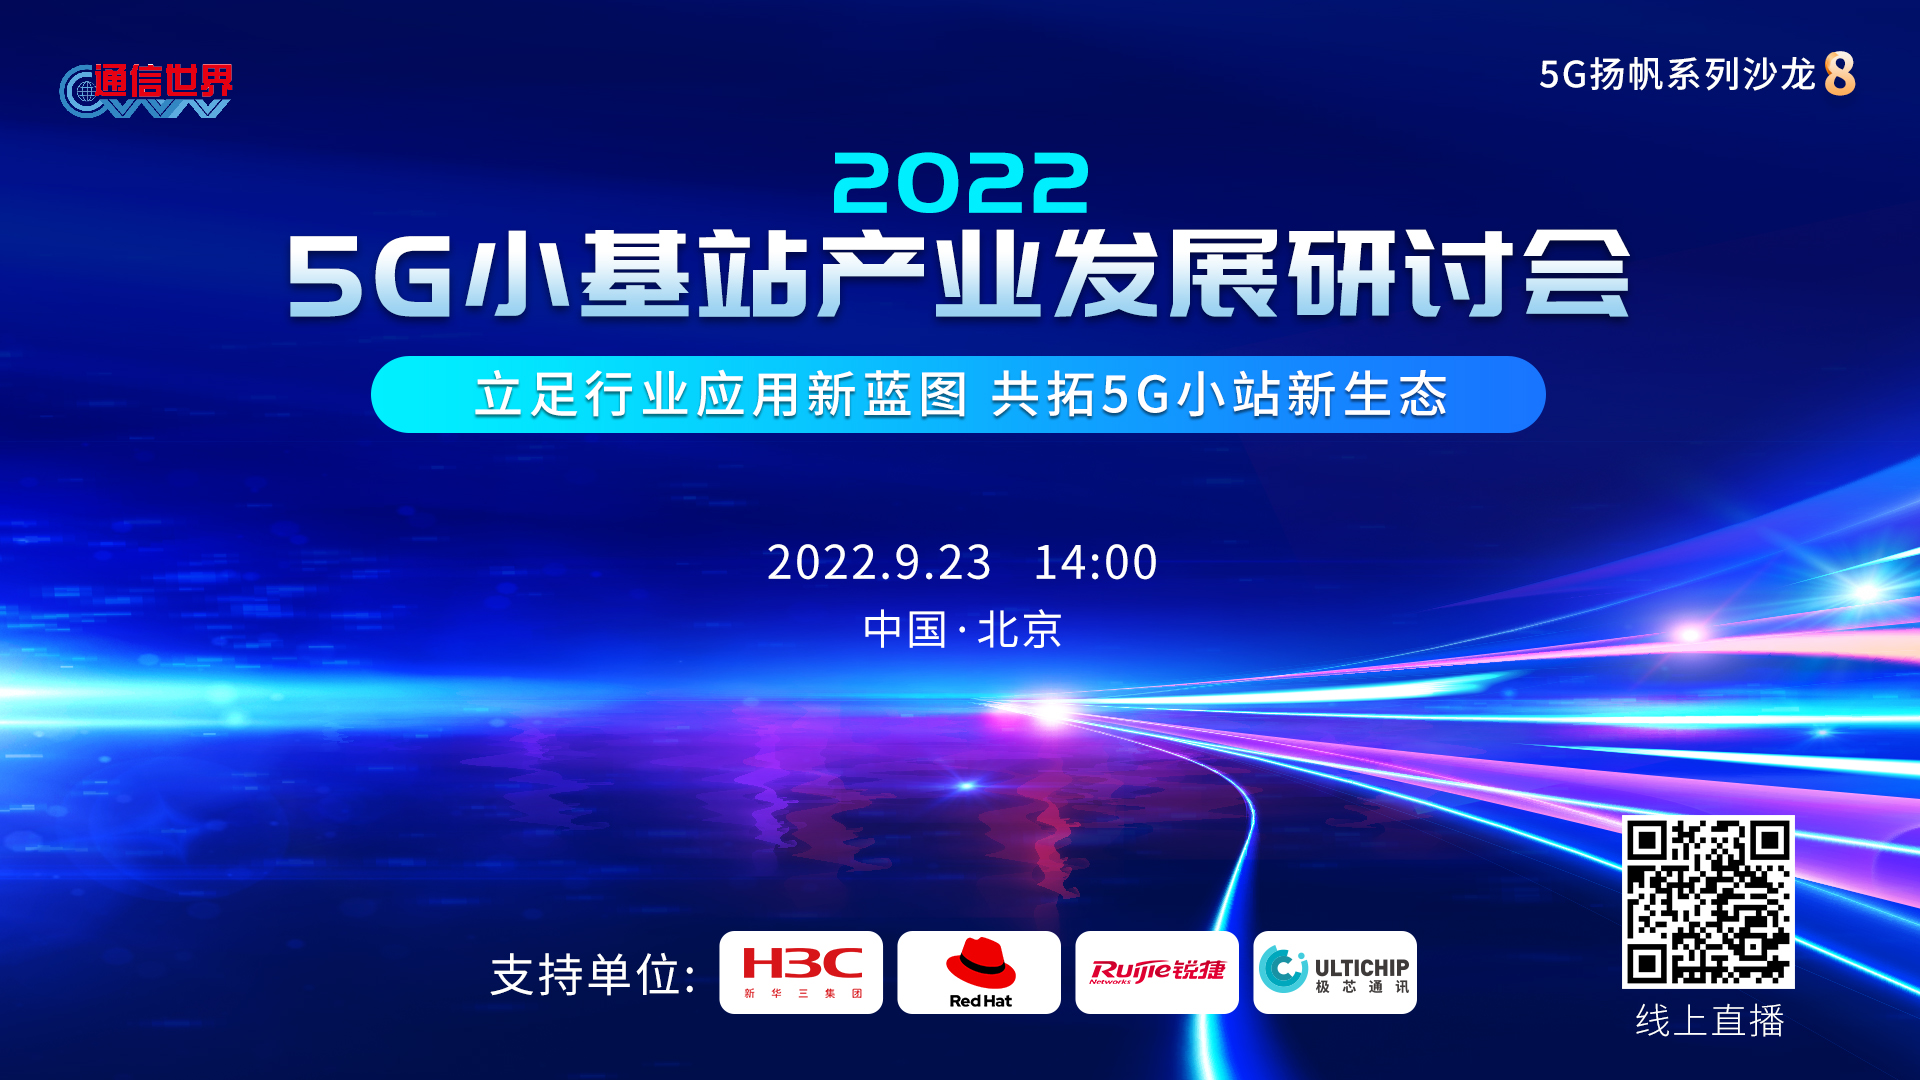 2022 5G小基站产业发展研讨会